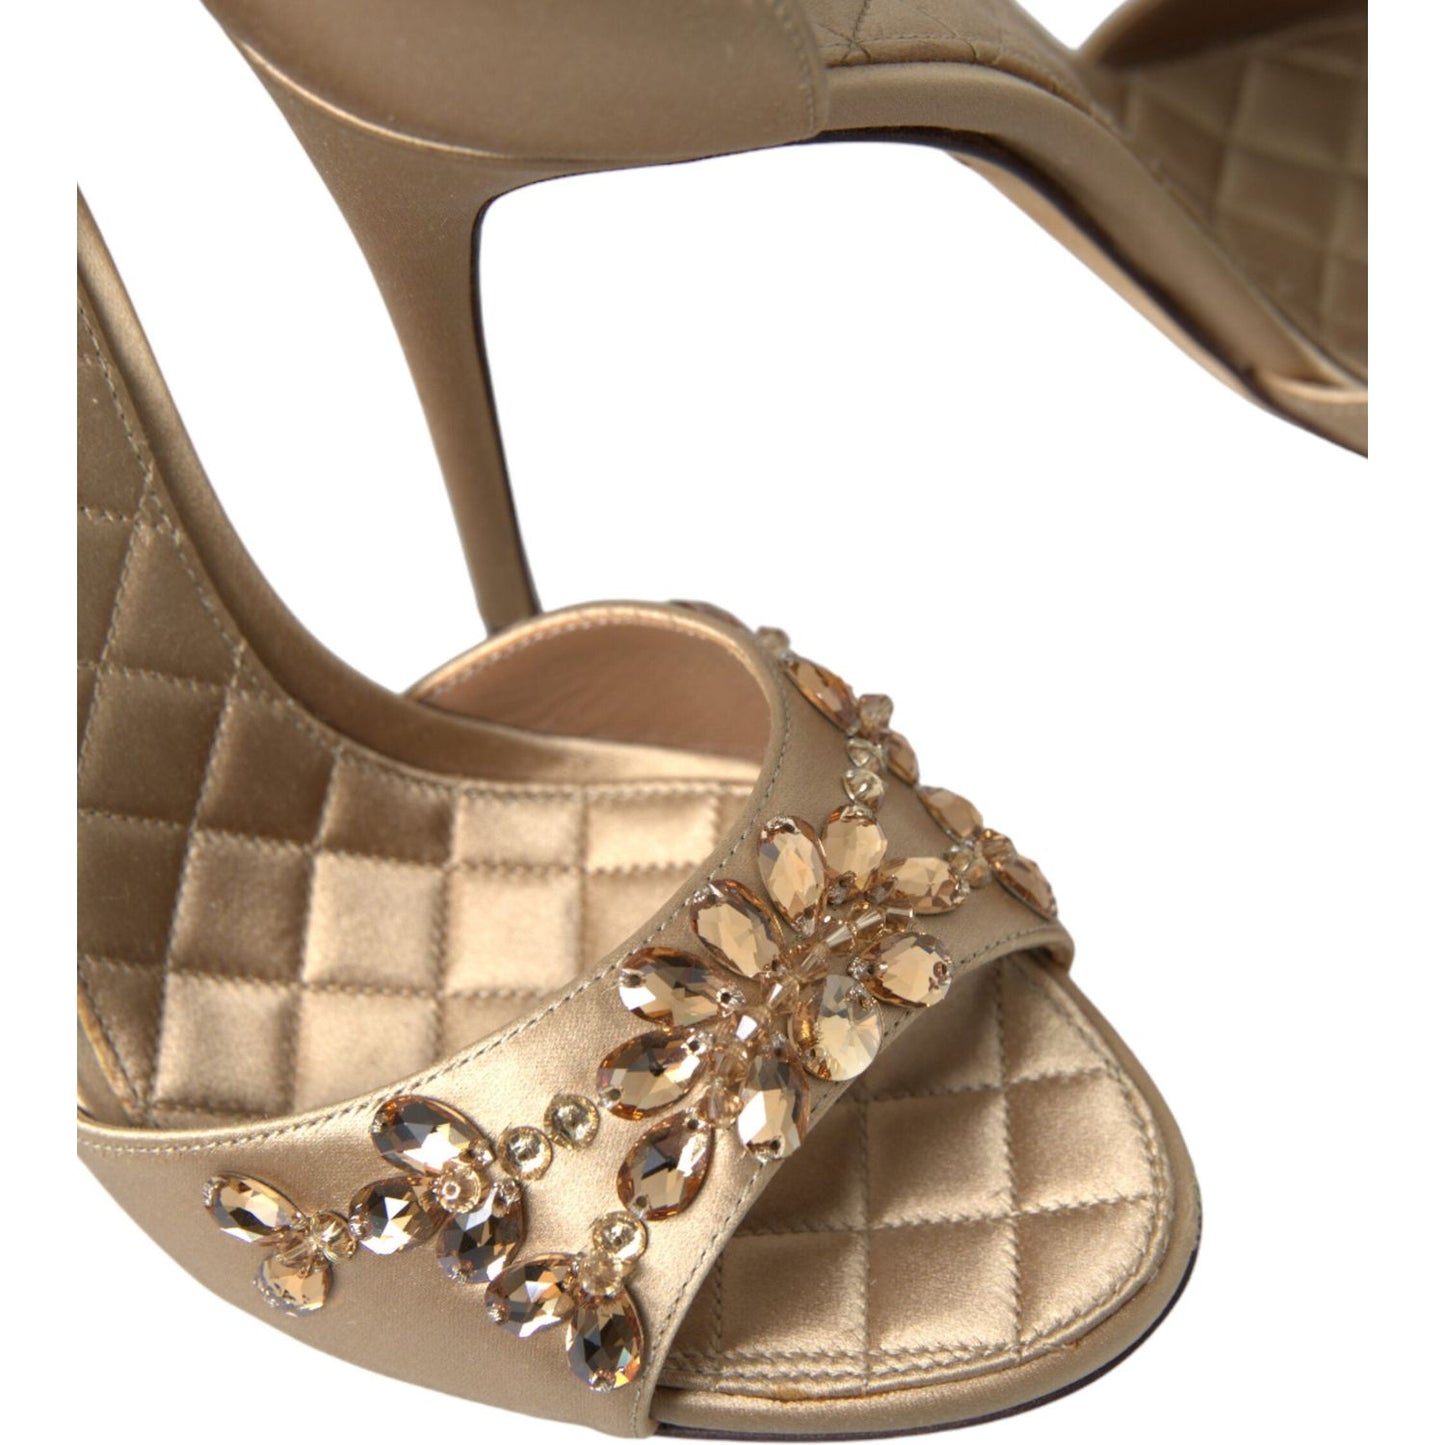 Dolce & Gabbana Crystal Embellished Heel Sandals gold-satin-ankle-strap-crystal-sandals-shoes 465A9651-bg-scaled-9f32e9aa-83d.jpg